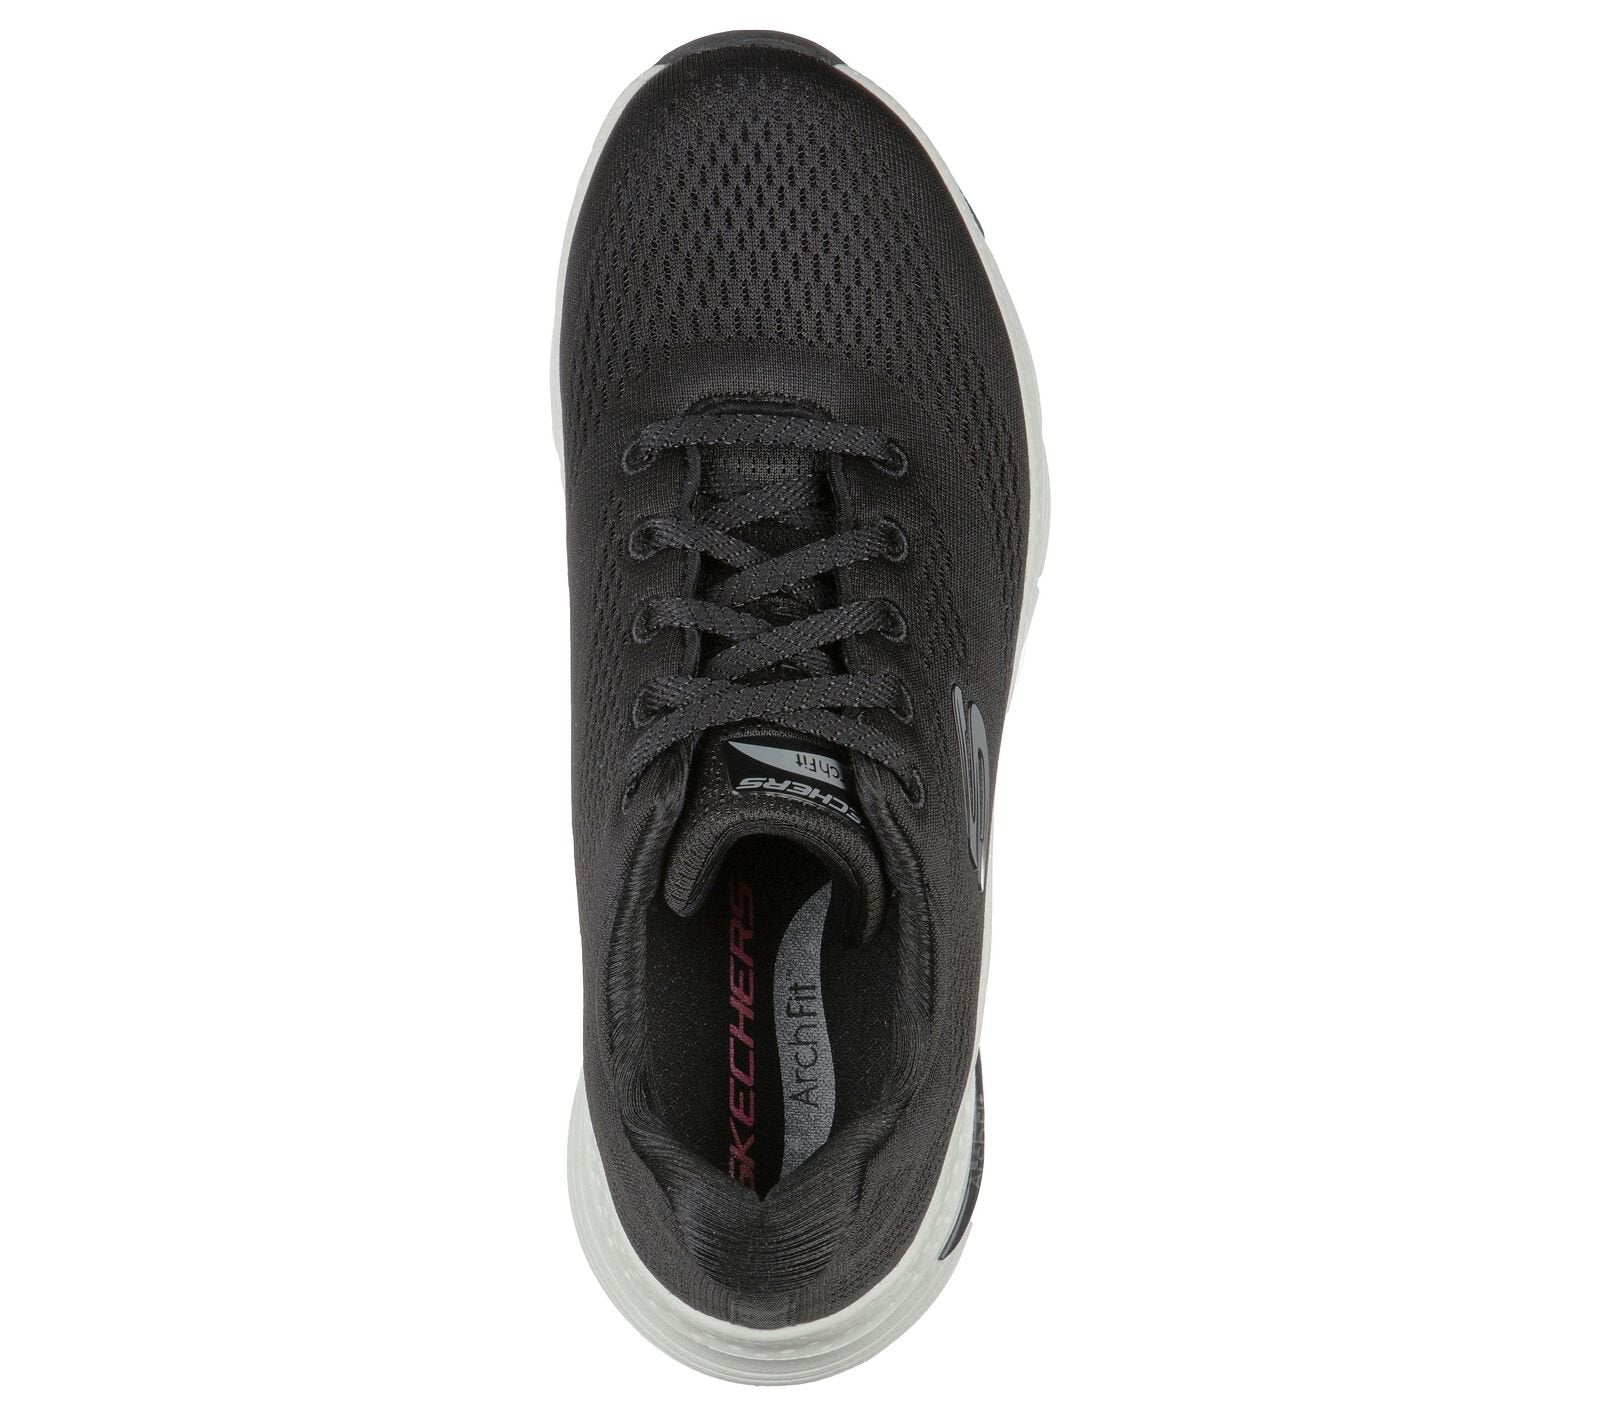 Skechers Arch Fit - Big Appeal Sneakers Black